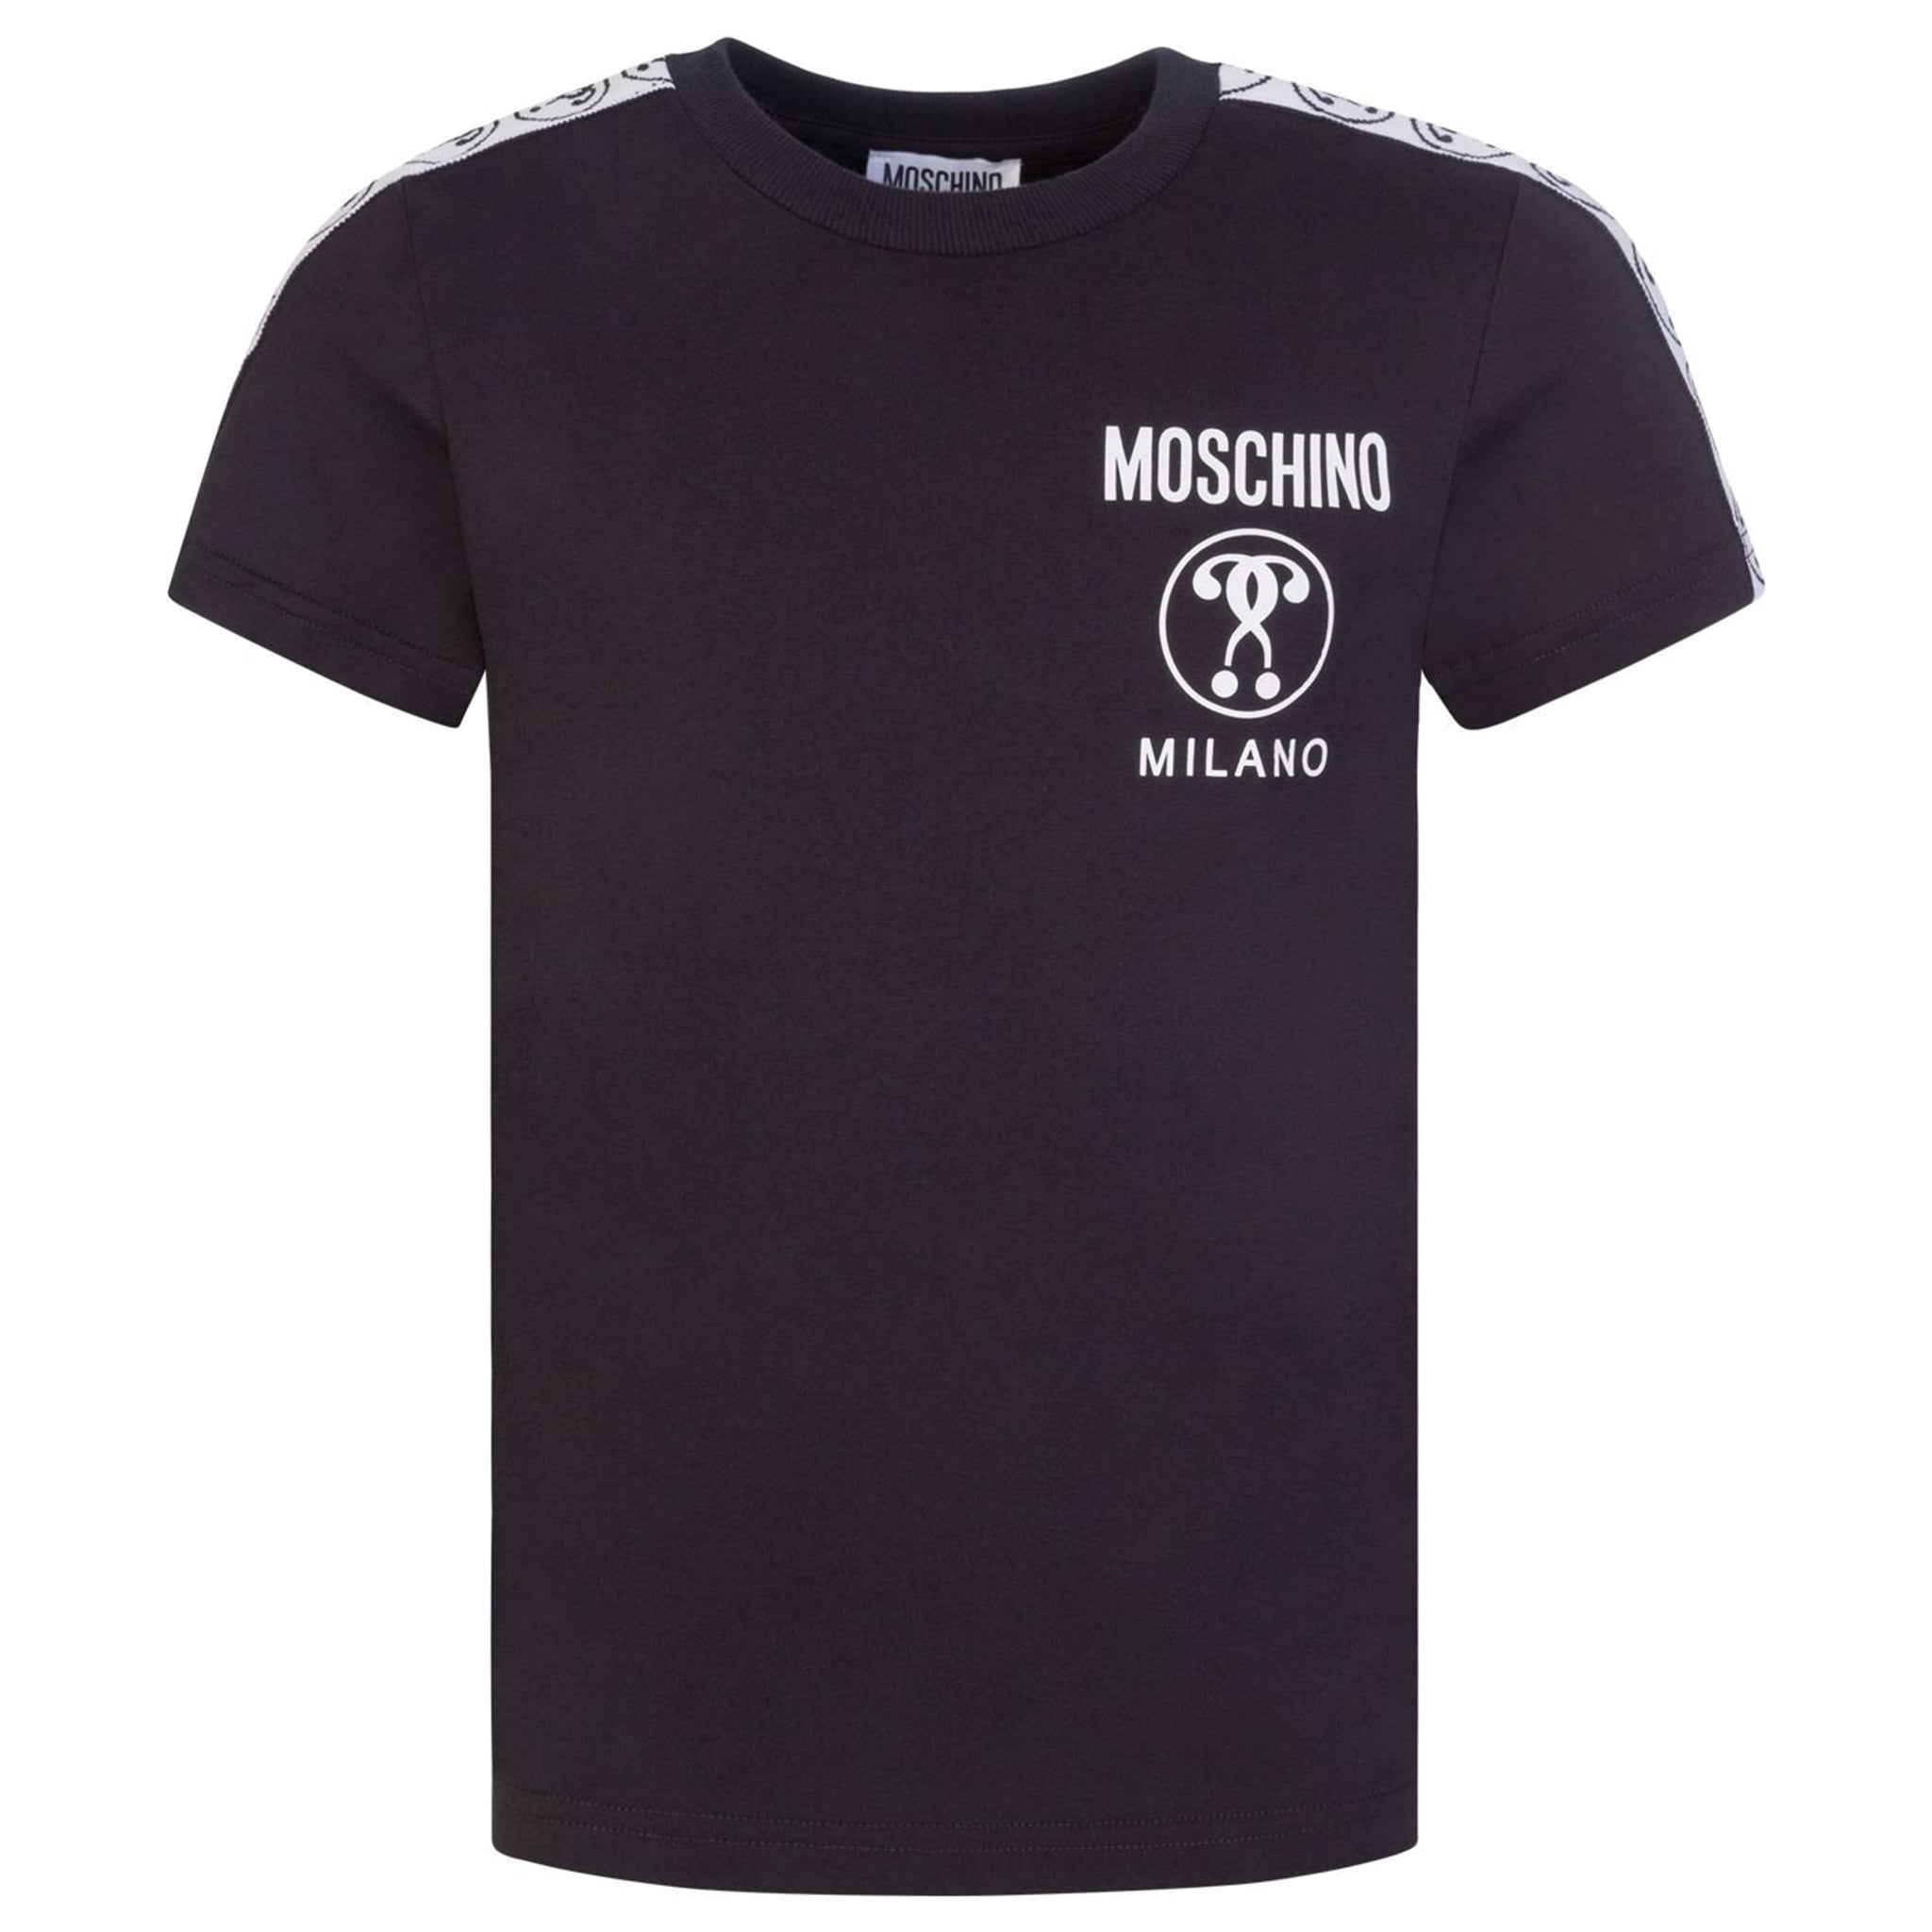 T-shirt Short Sleeve 10A Black 100%CO